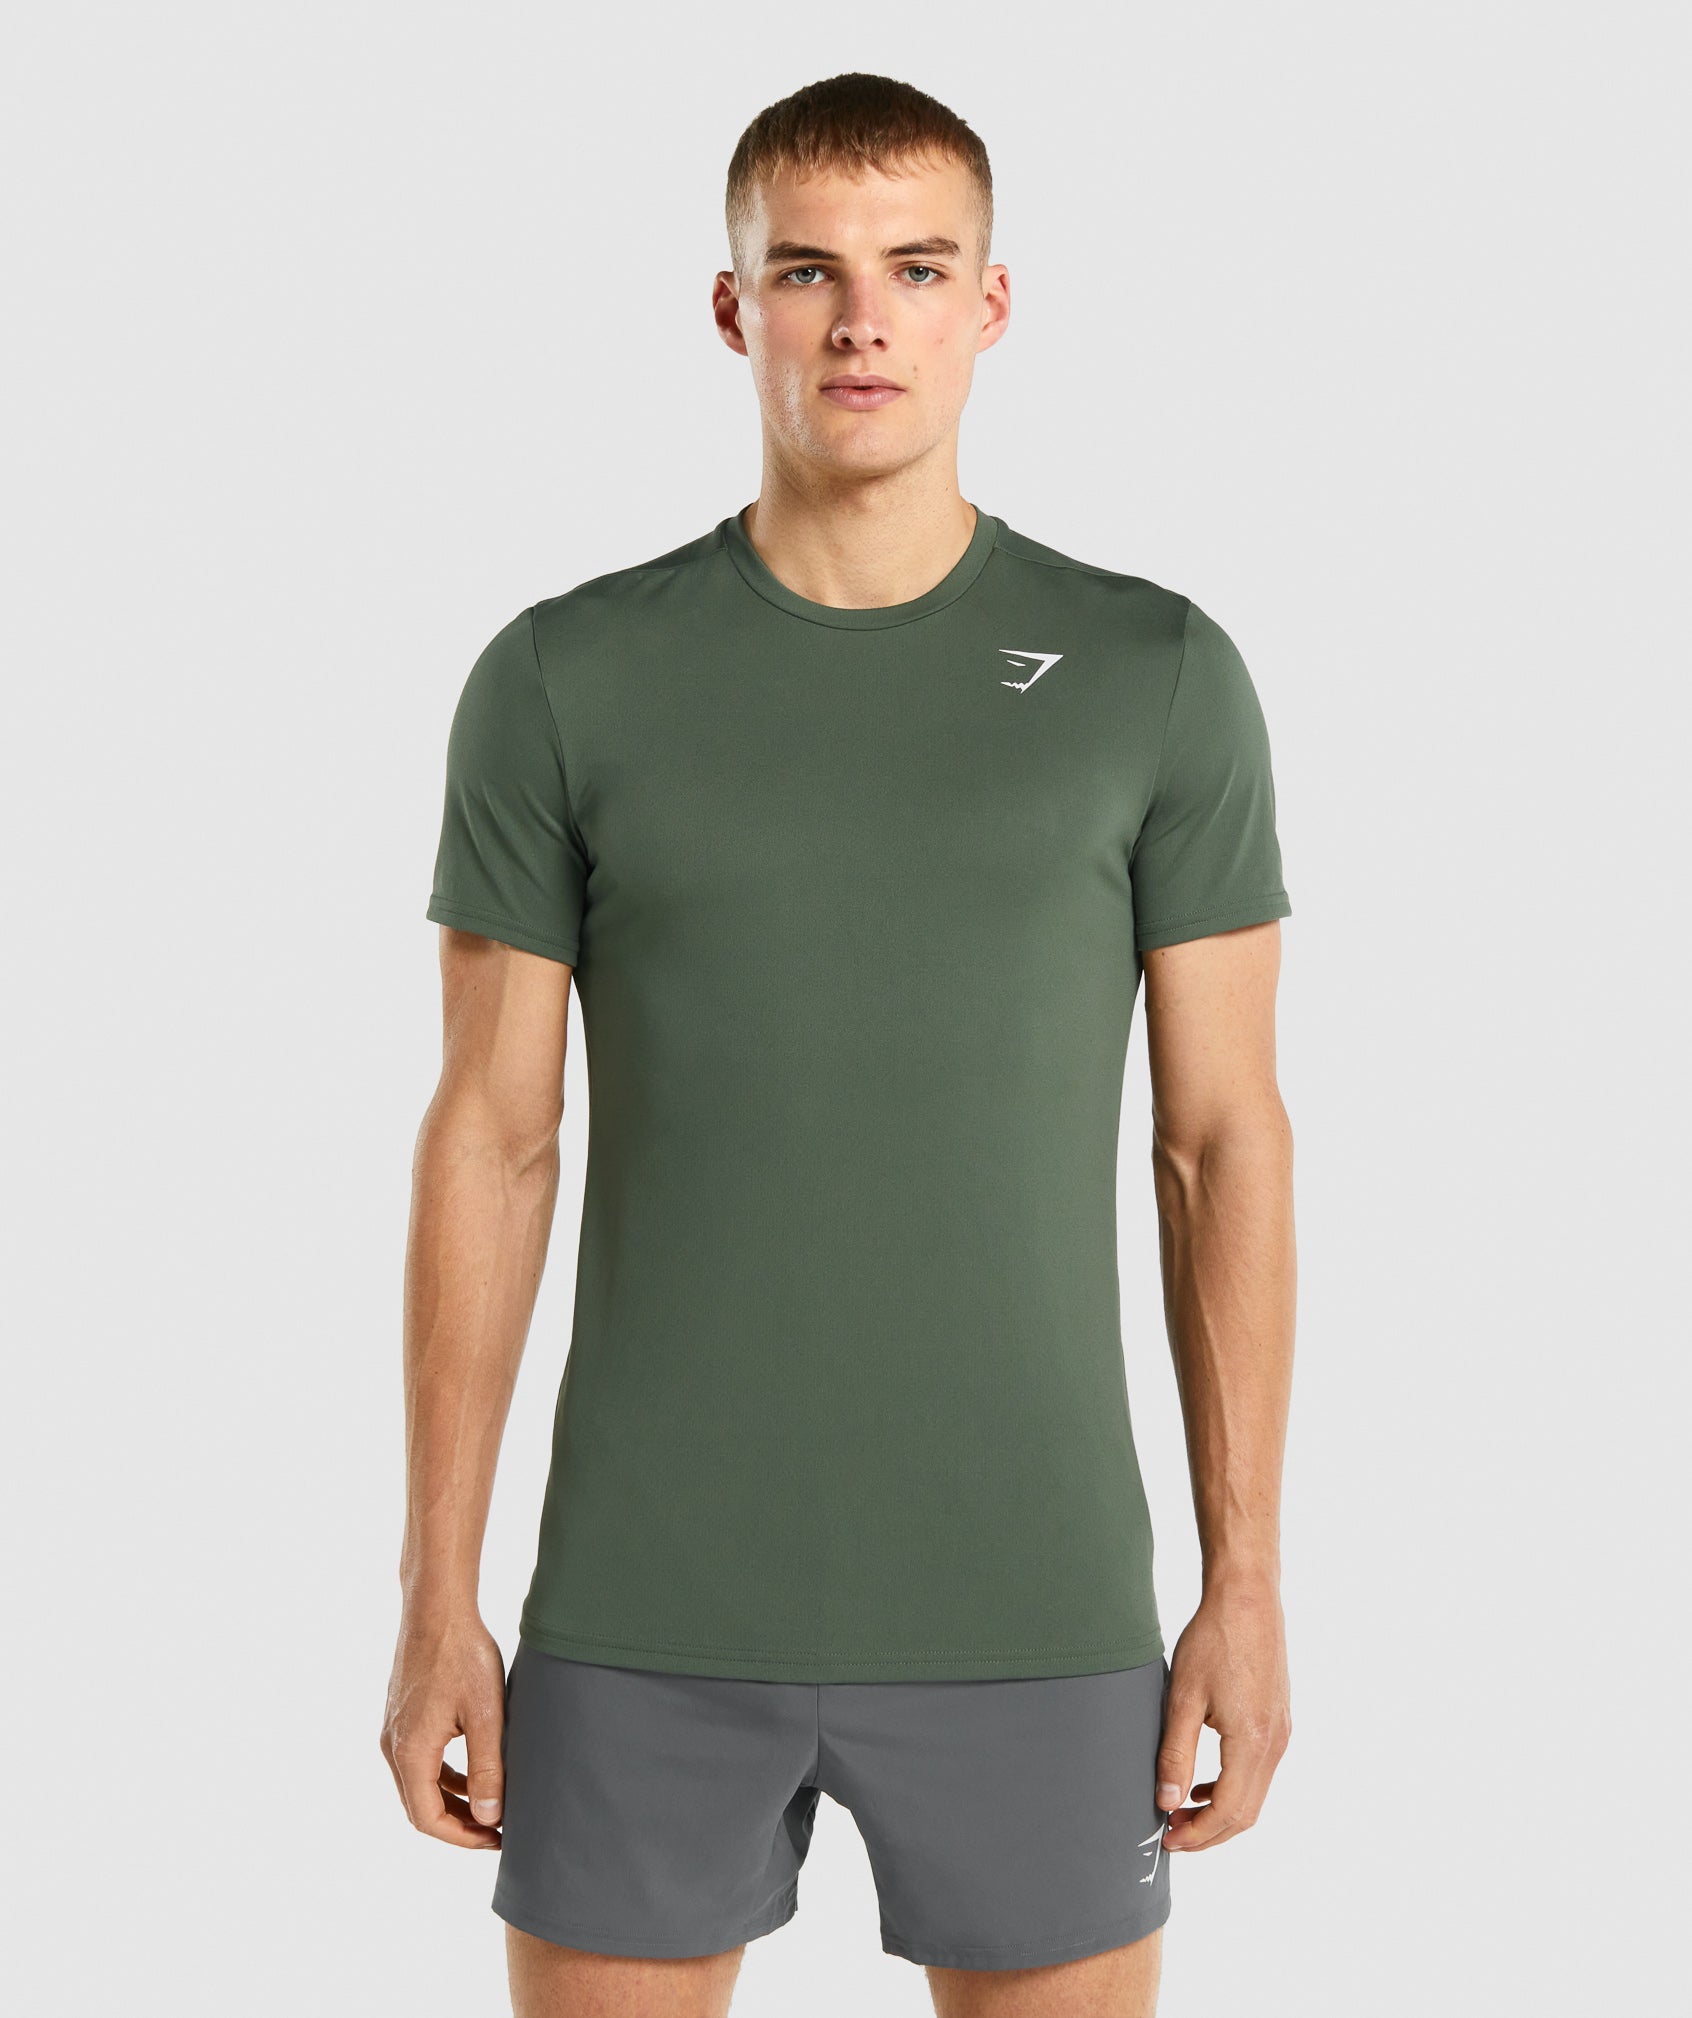 Buy Gaiam men slim fit short sleeve training t shirt basil green